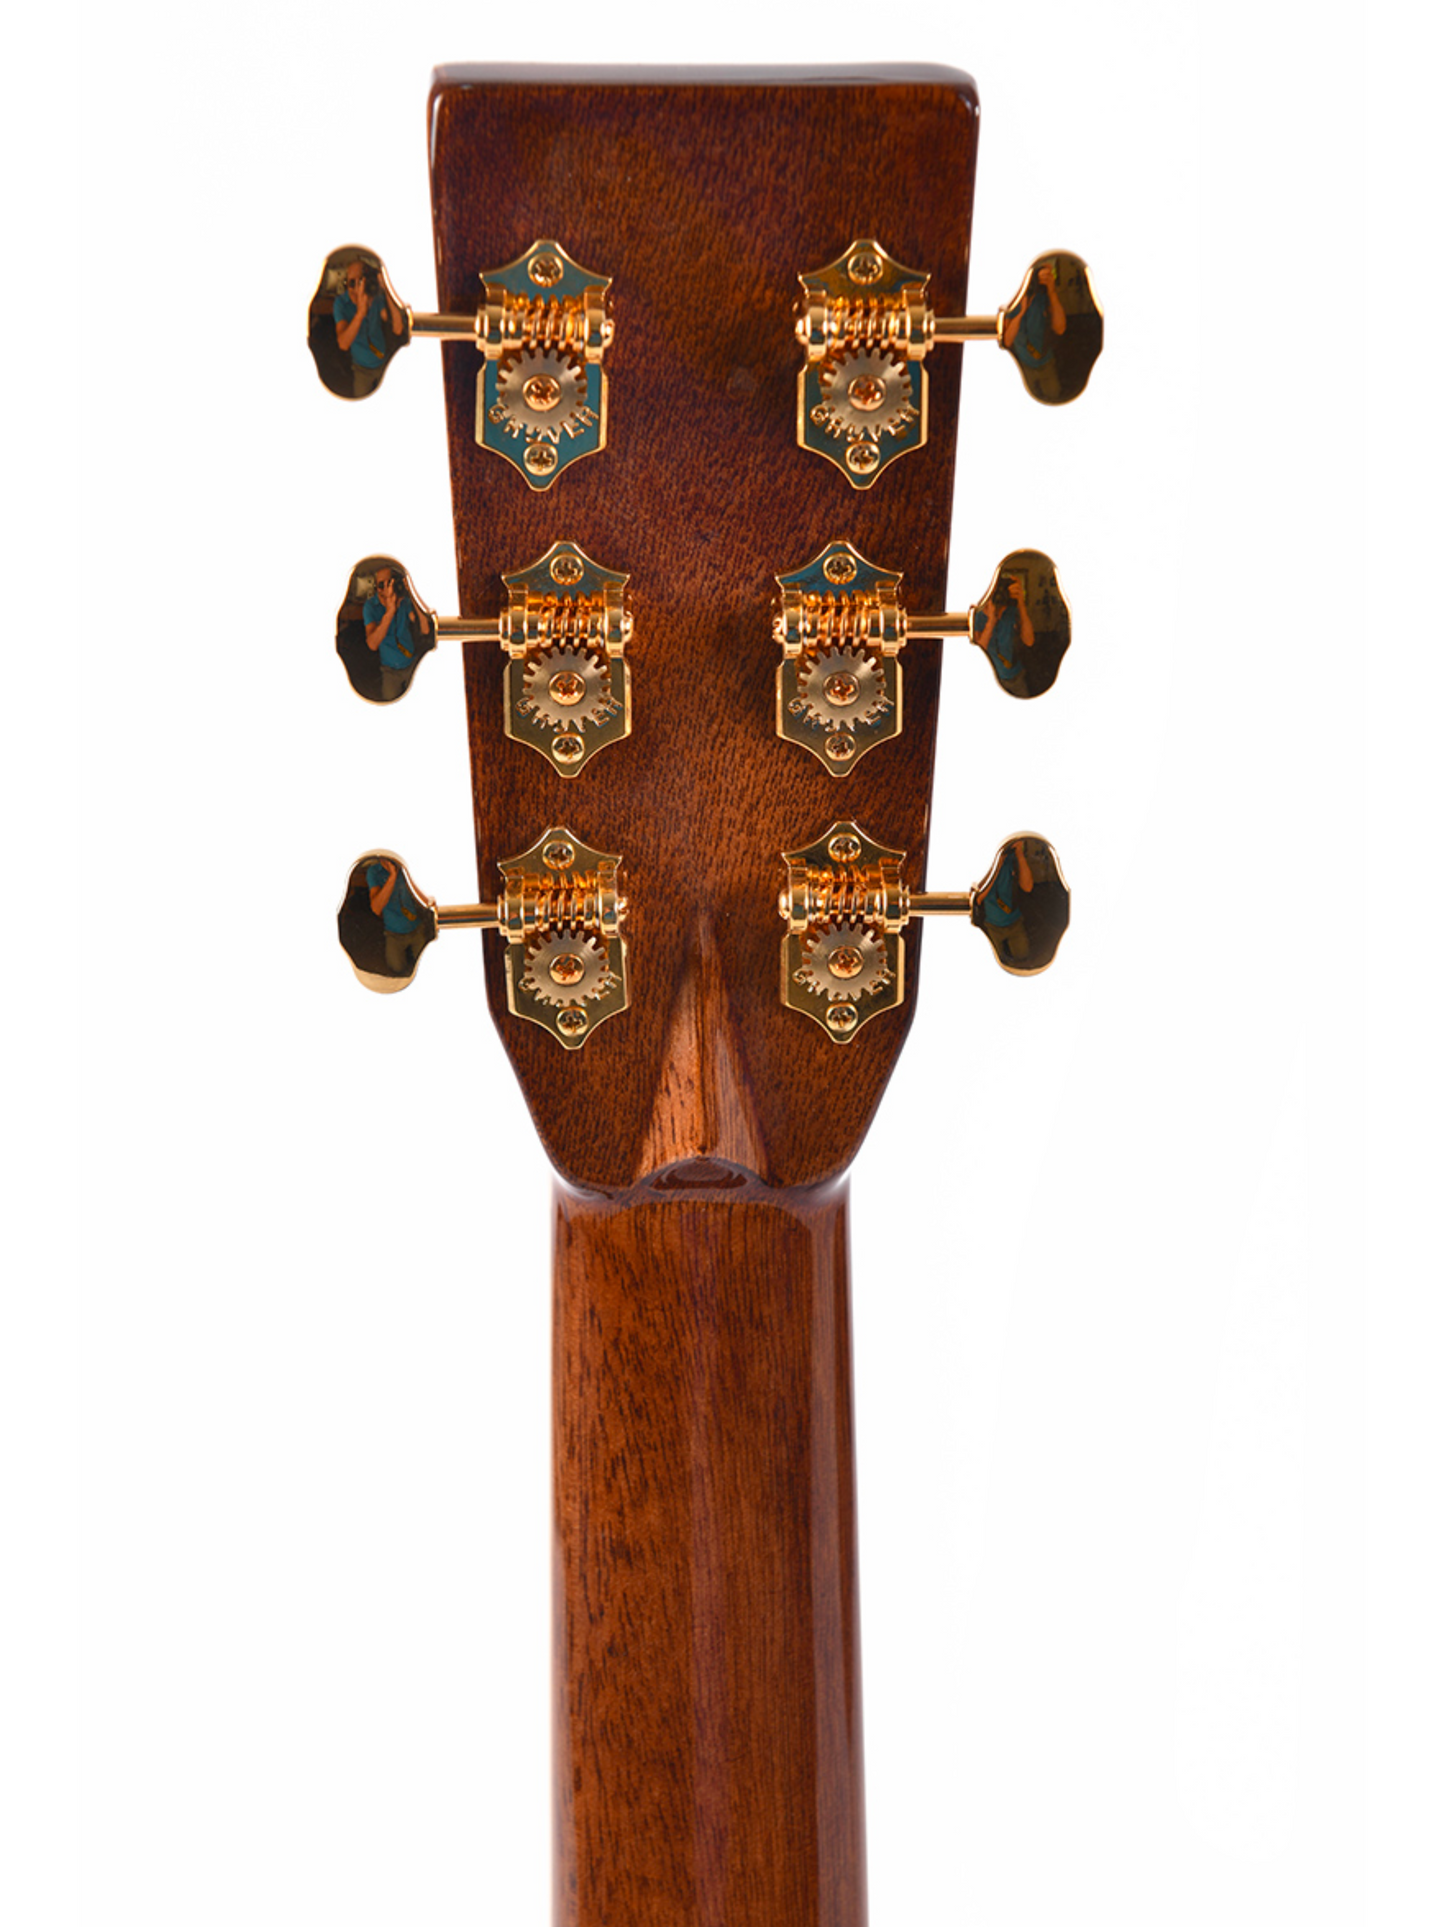 Sigma DT-42 Acoustic Guitar